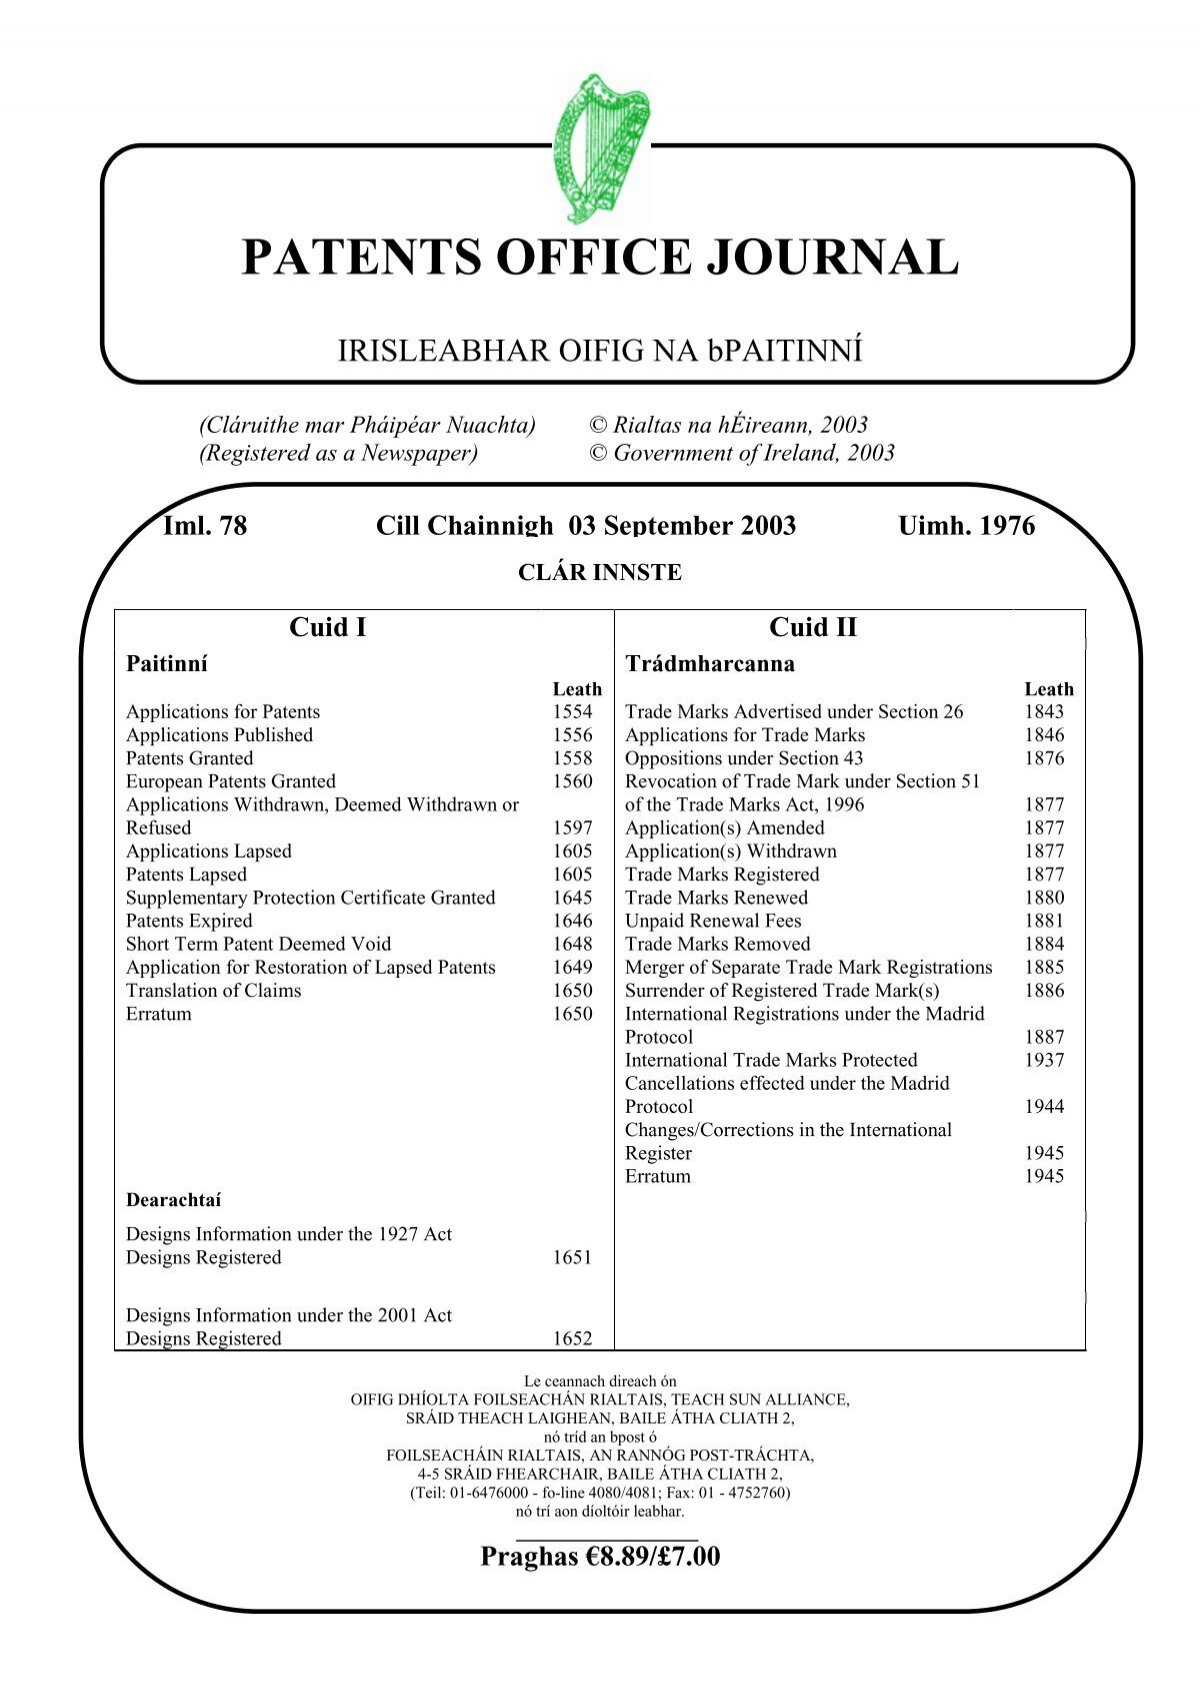 Patents Office Journal Irish Patents Office